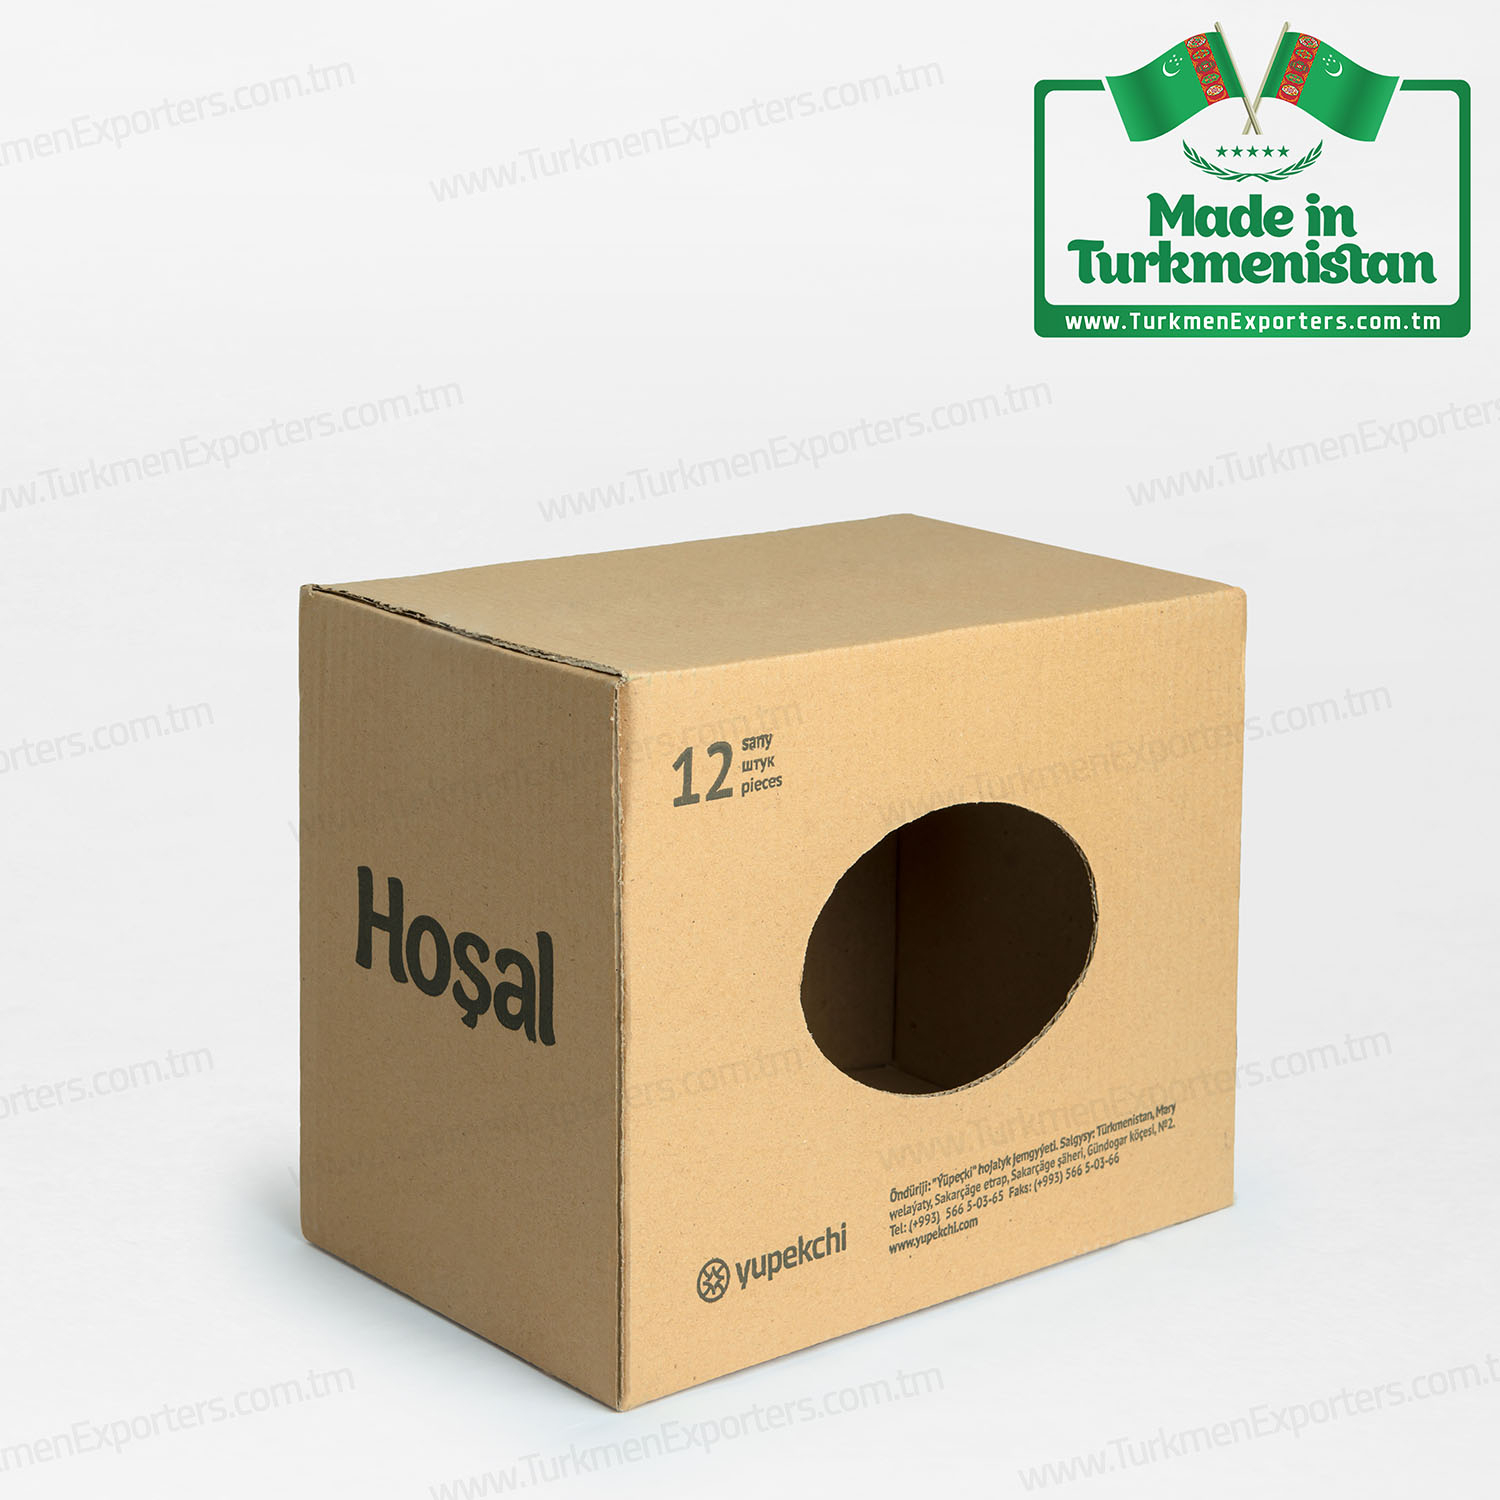 Cardboard box in Turkmenistan | Baka individual enterprise